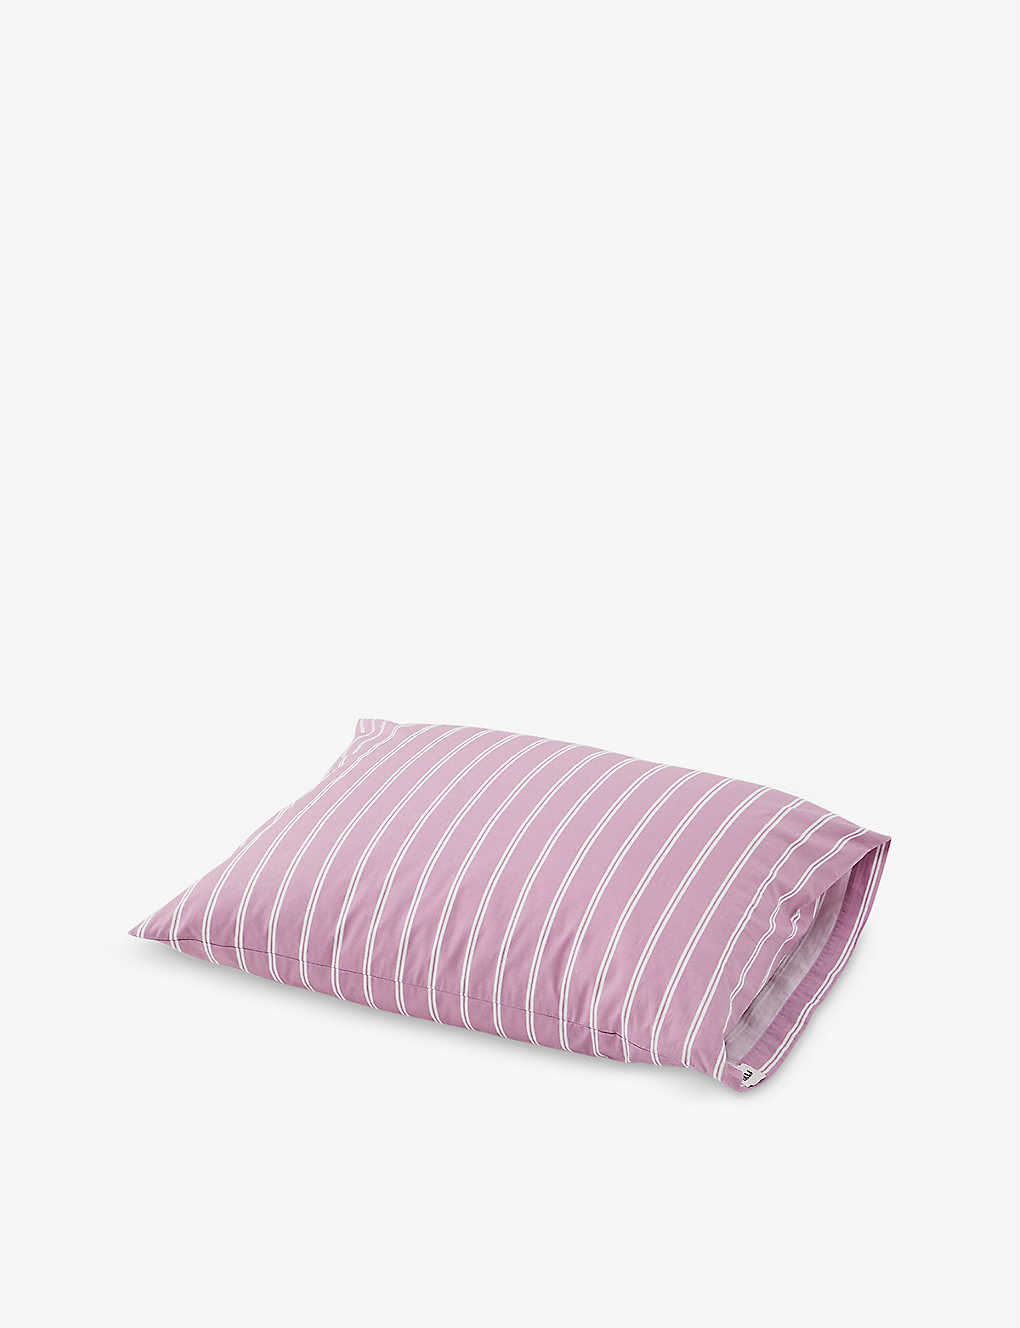 TEKLA ストライプ オーガニックコットン 枕カバー 50cm x 70-90cm Stripe organic-cotton pillowcase 50cm x 70-90cmPINK